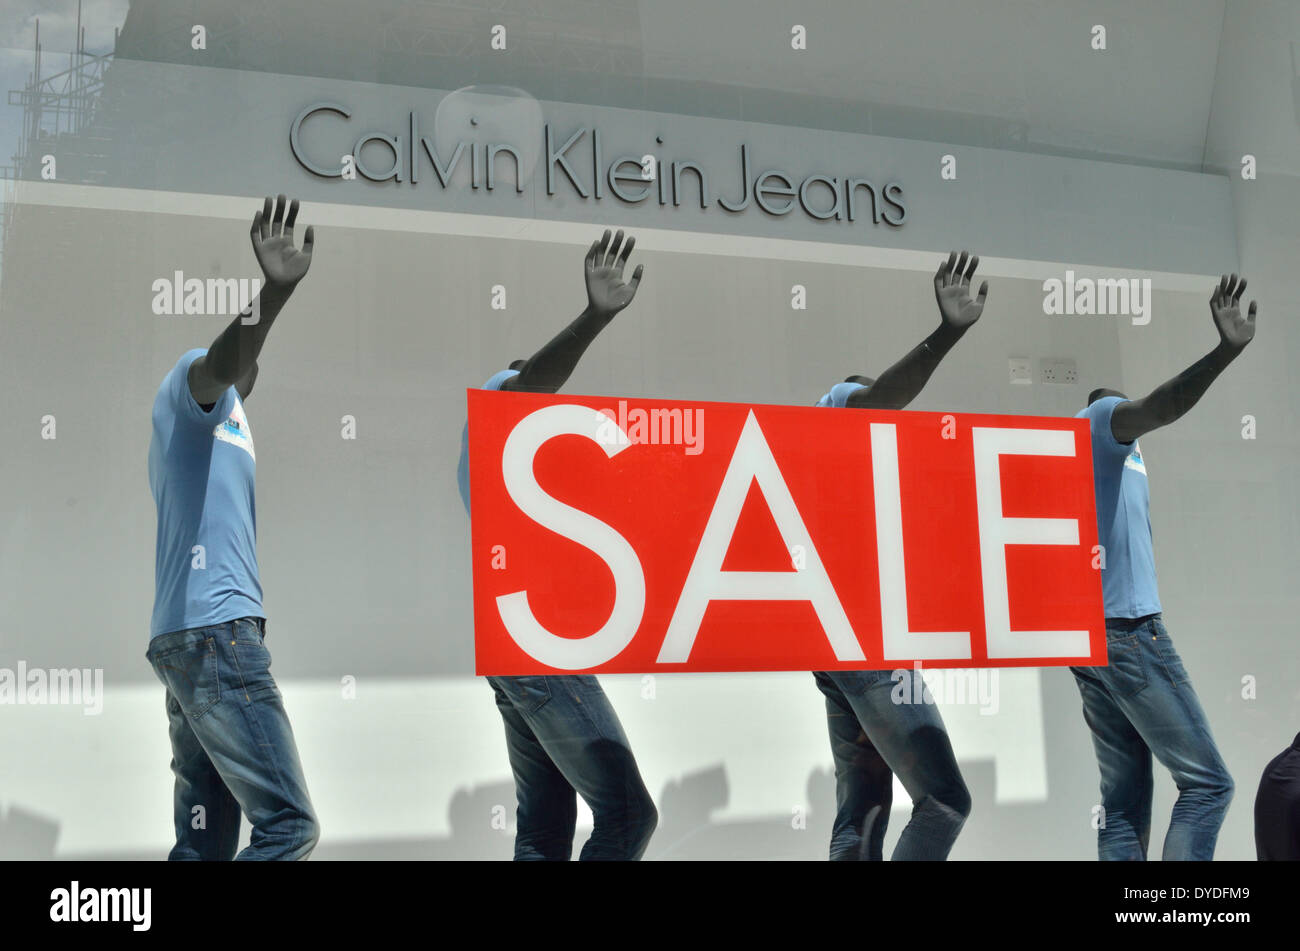 calvin klein for Online shopping has never been as easy!